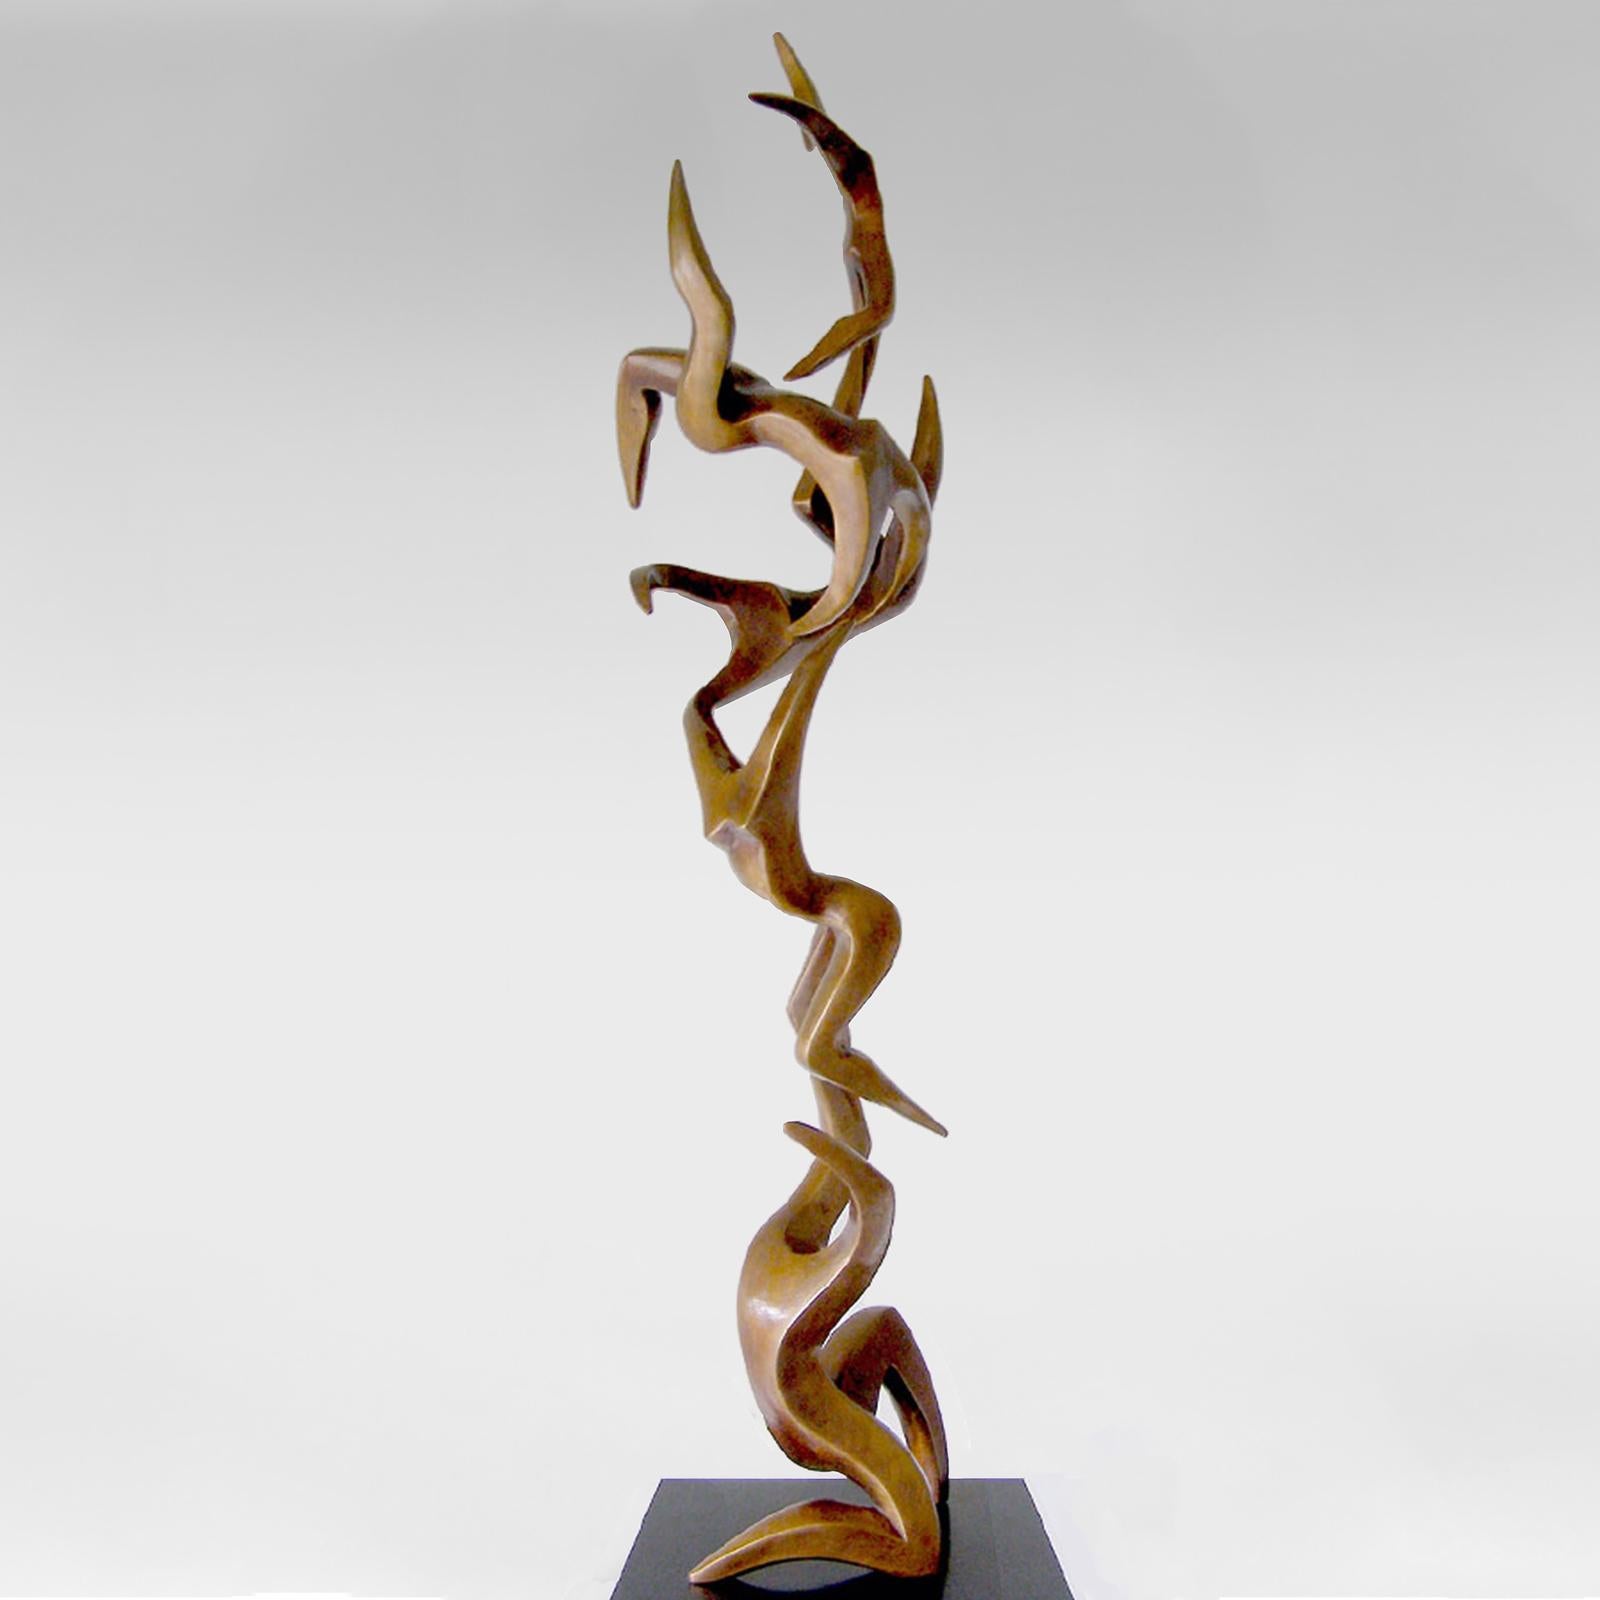 Michael Vaynman Figurative Sculpture – Flug , Zeitgenössische Bronze-Skulptur